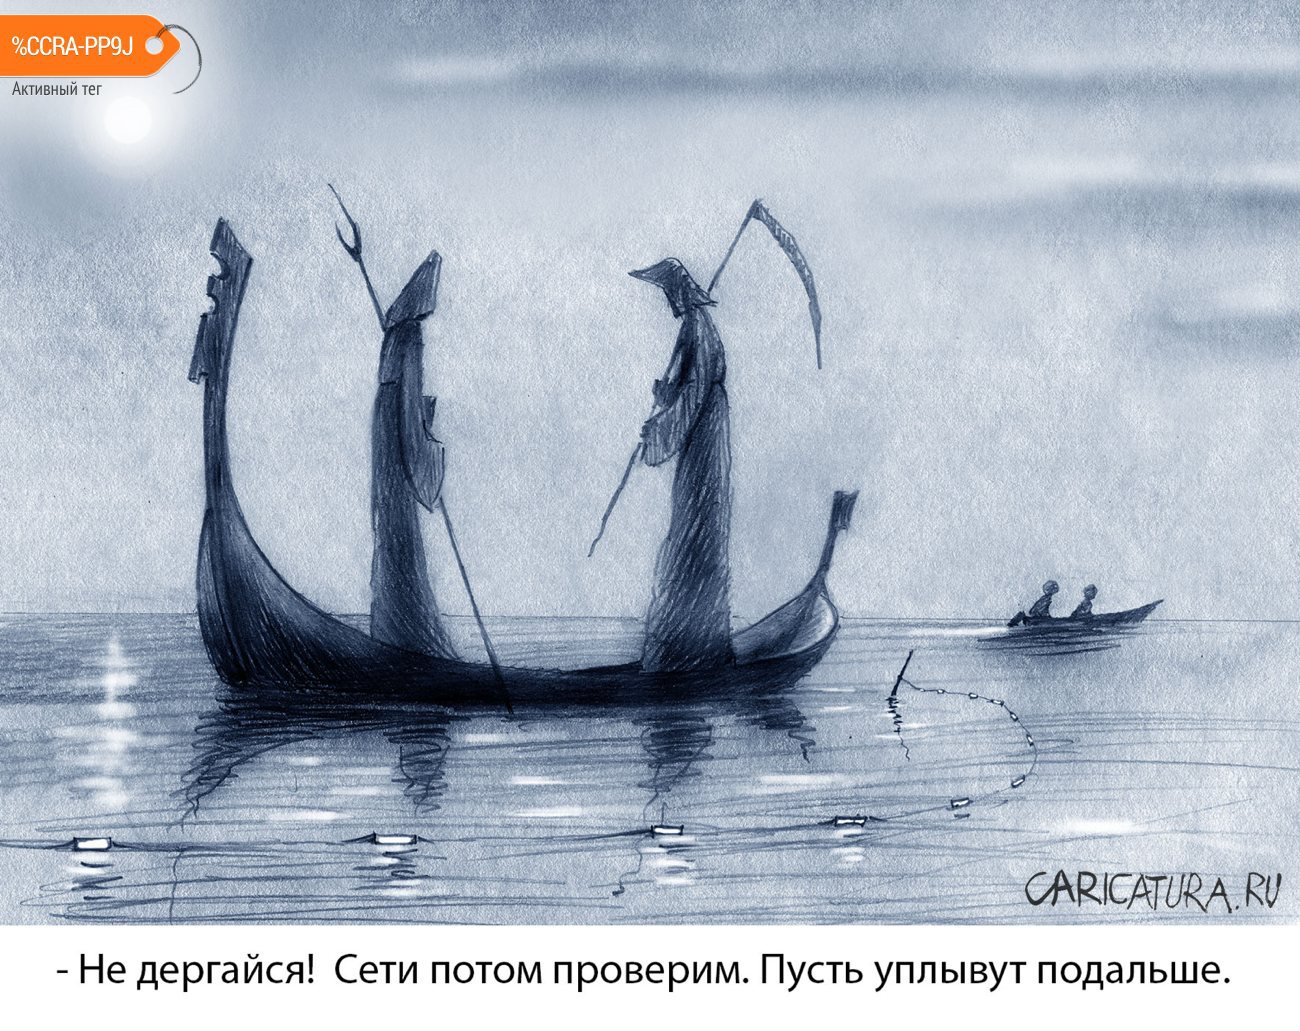 Карикатура "Ряженые", Александр Попов